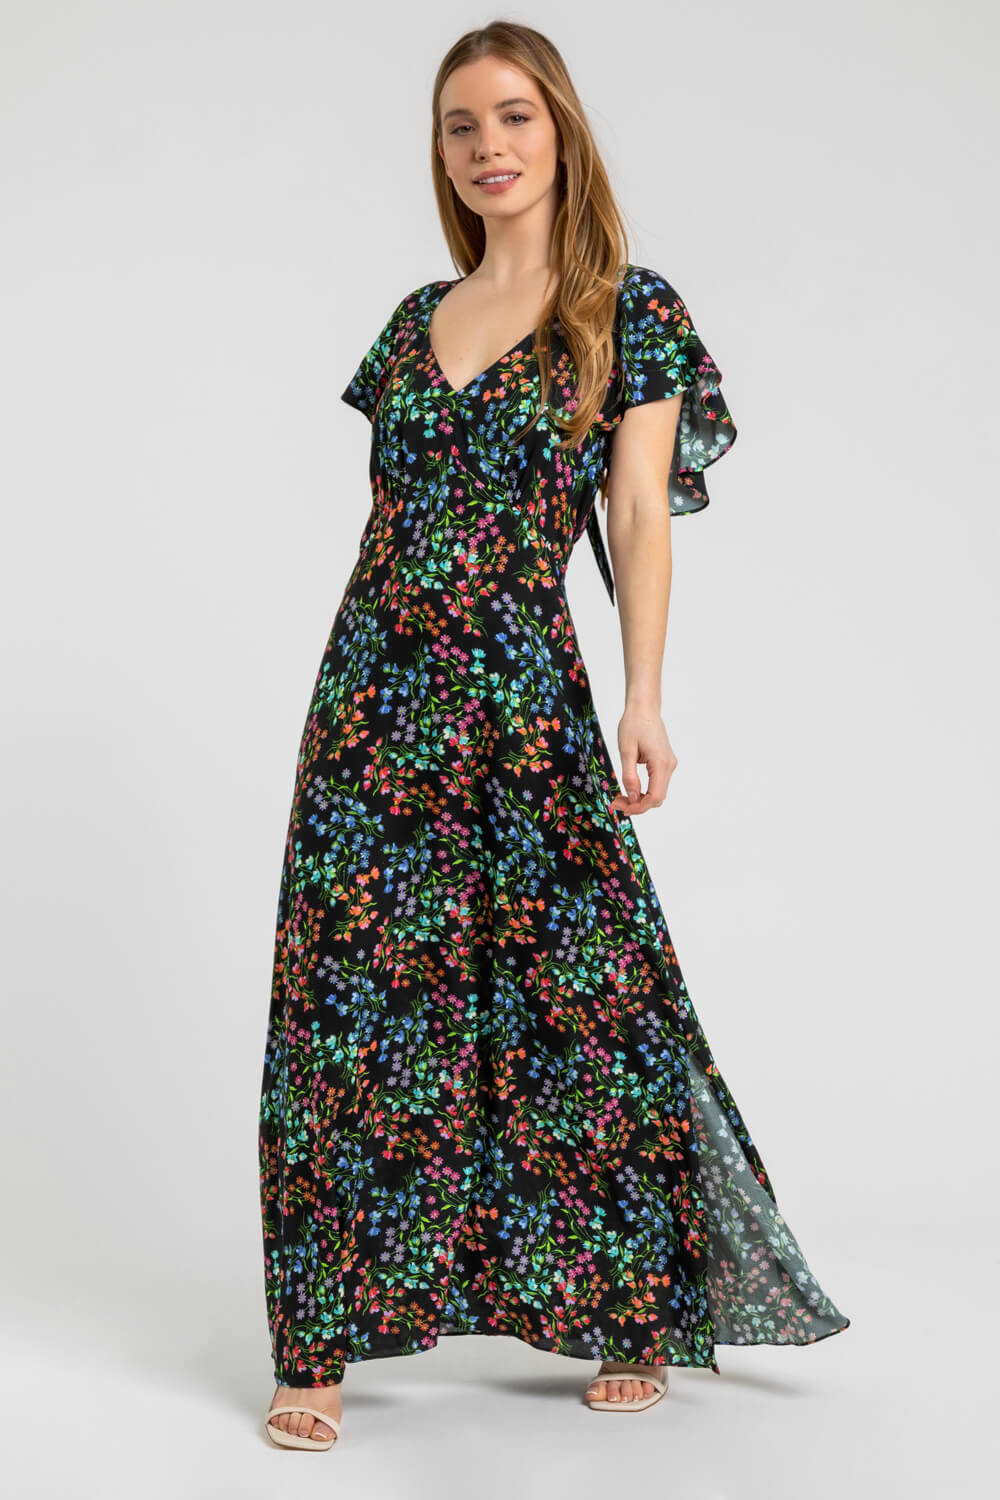 Black Petite Ditsy Floral Print Maxi Dress, Image 3 of 5